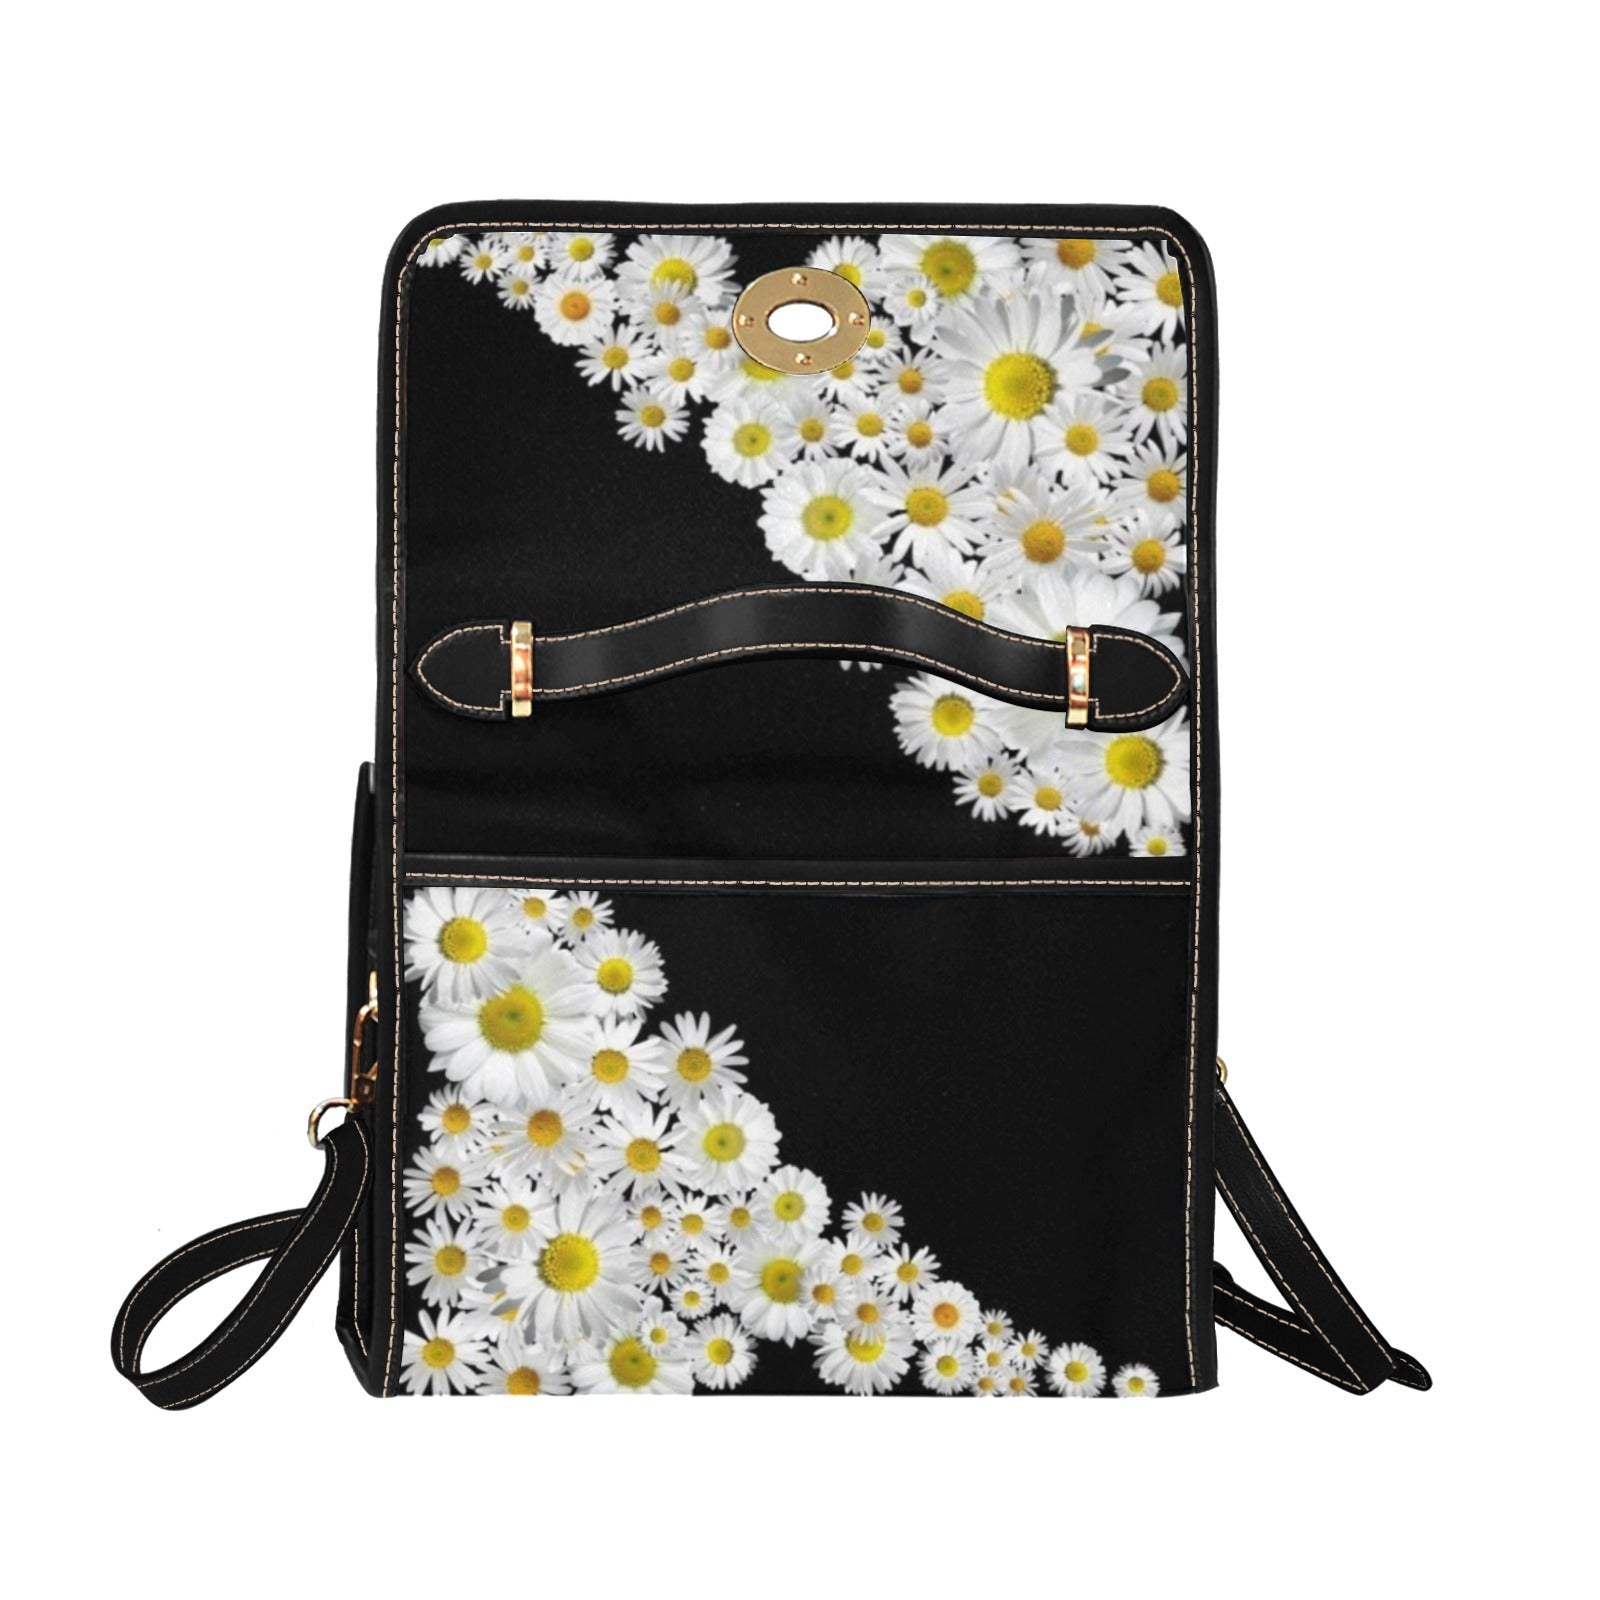 Daisy - Waterproof Canvas Handbag